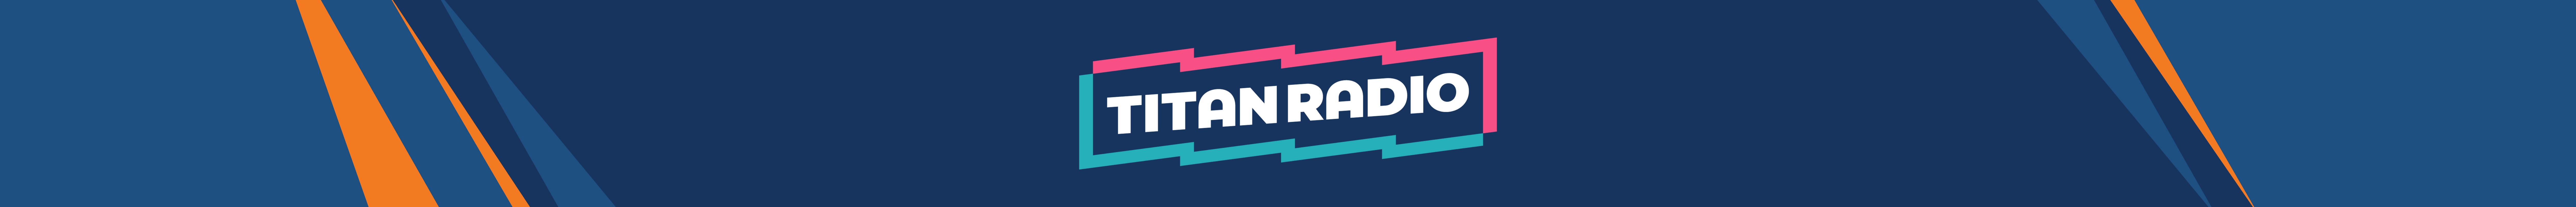 titan radio banner